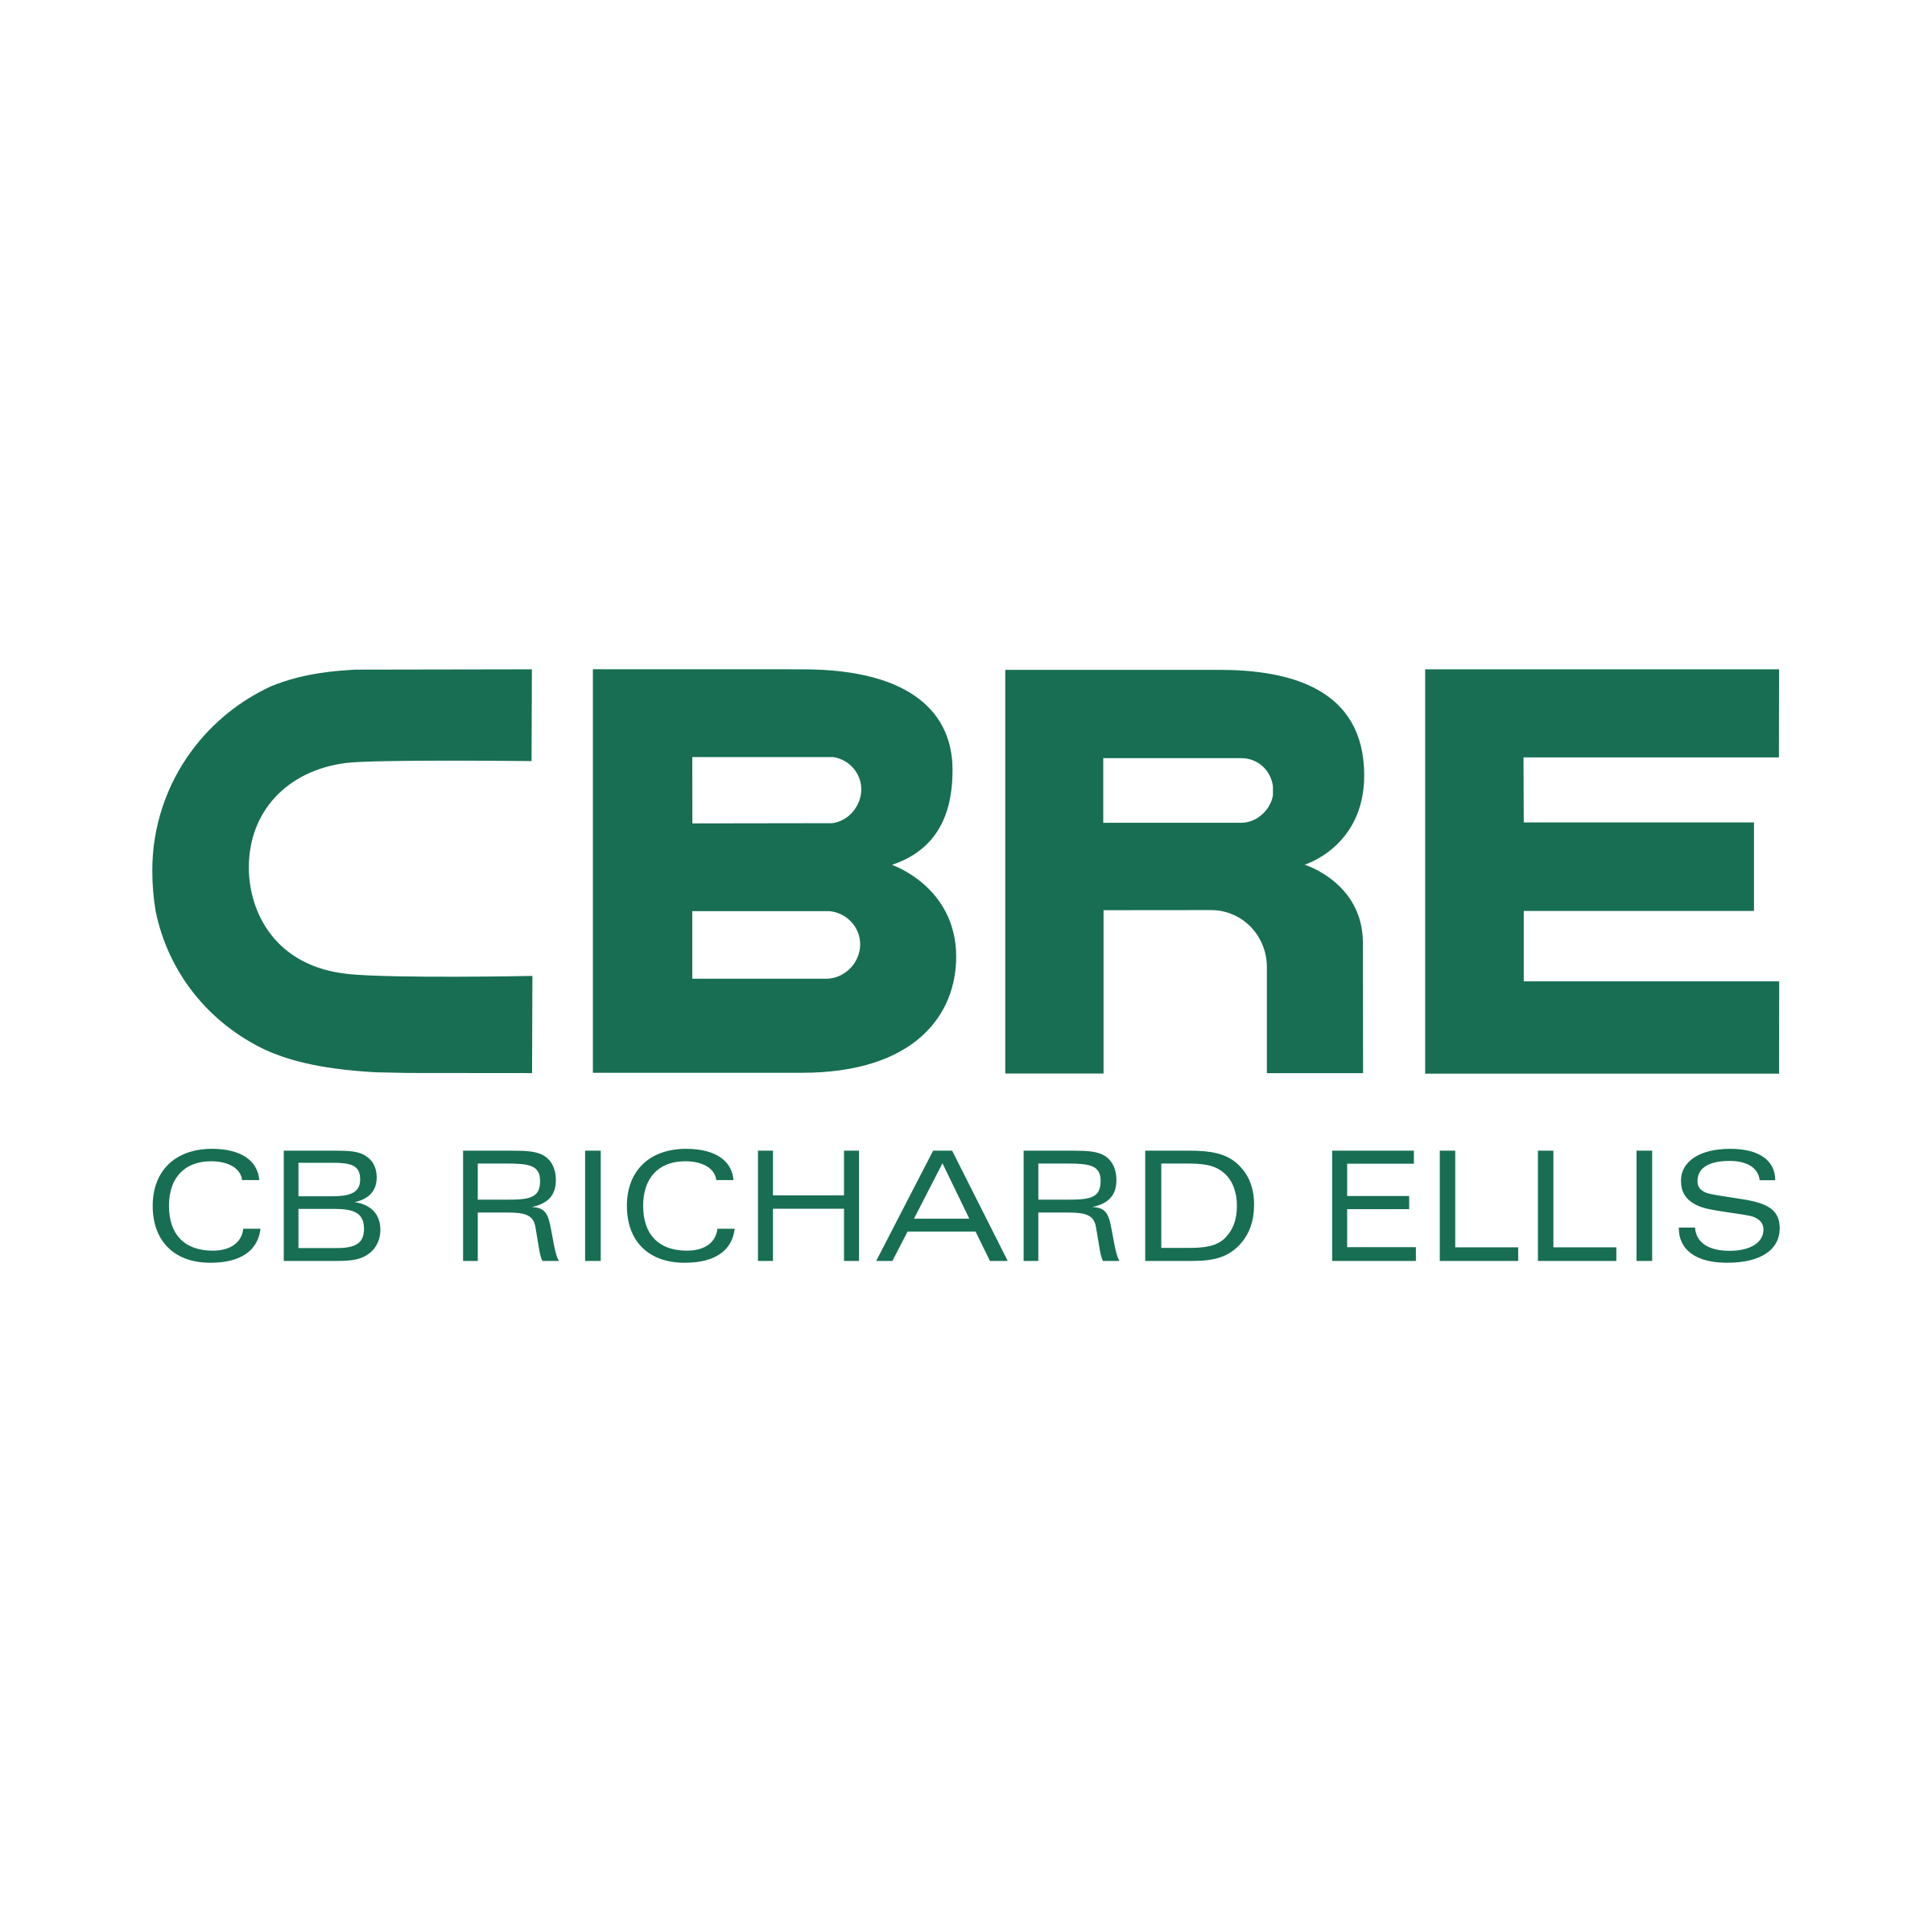 Ellis Logo - CB Richard Ellis Logo PNG Transparent & SVG Vector - Freebie Supply